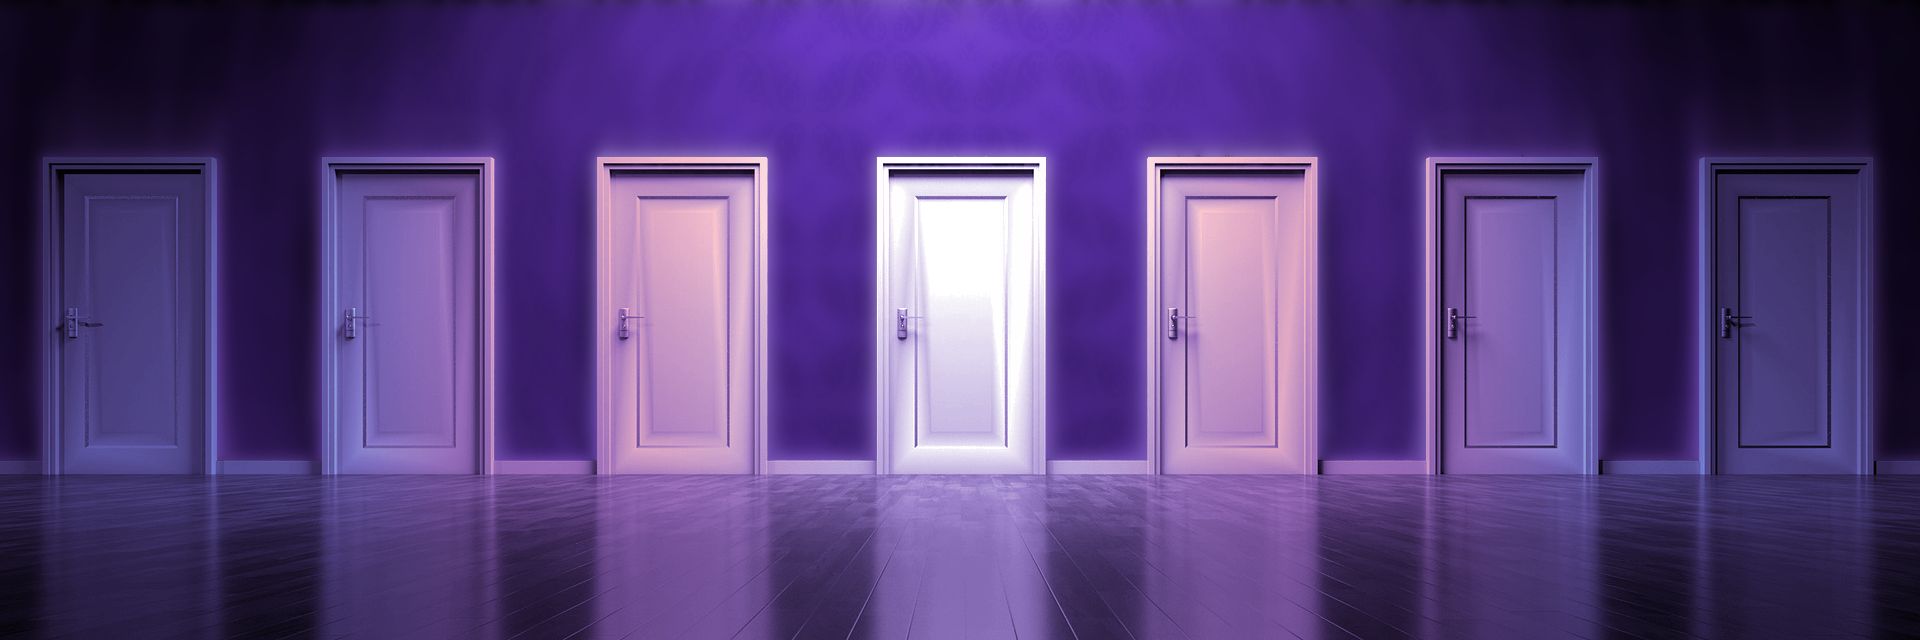 sen - labirynt drzwi